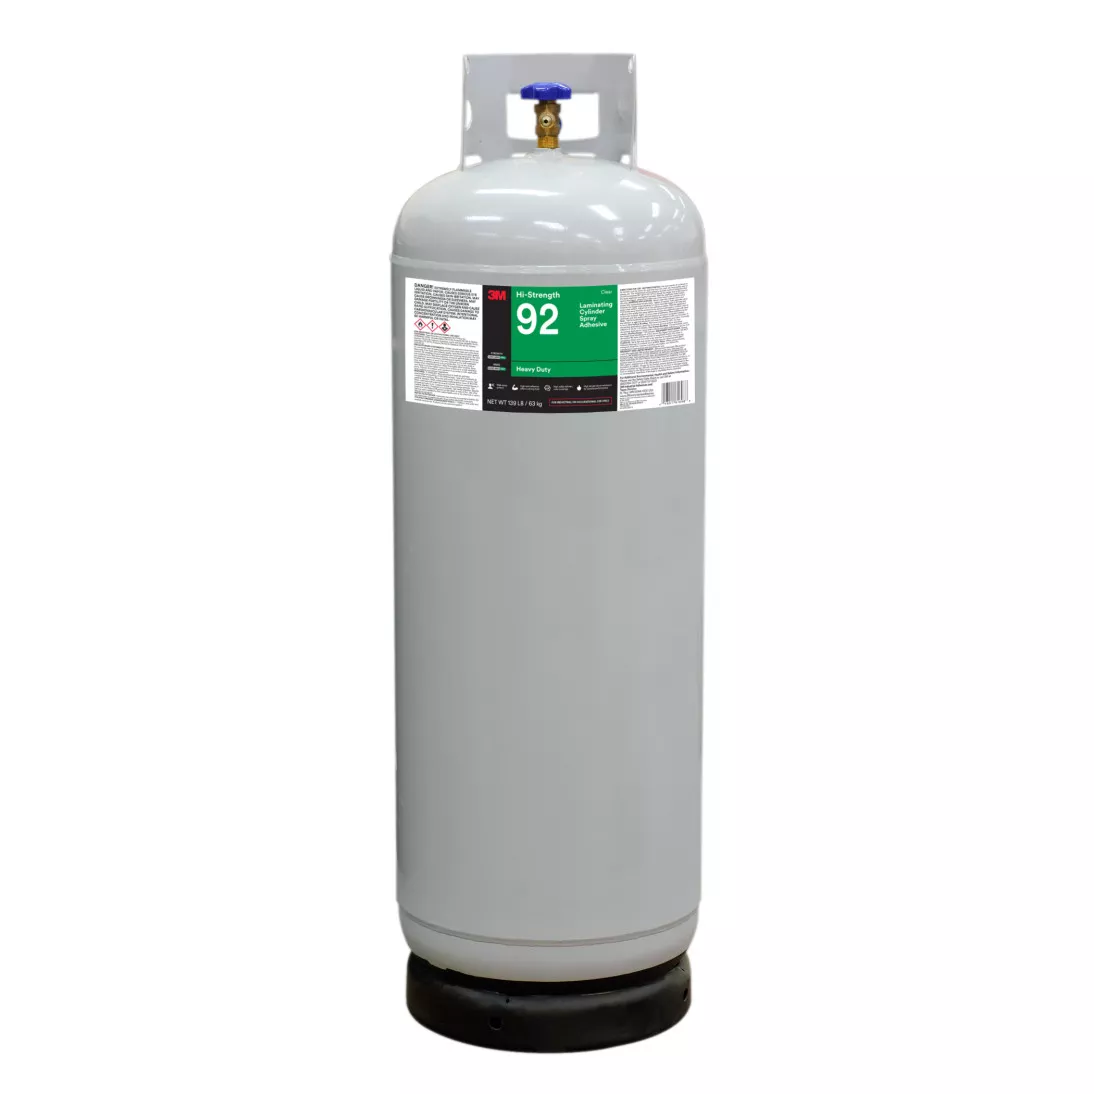 3M™ Hi-Strength Laminating 92 Cylinder Spray Adhesive, Clear,
Intermediate Cylinder (Net Wt 139 lb)